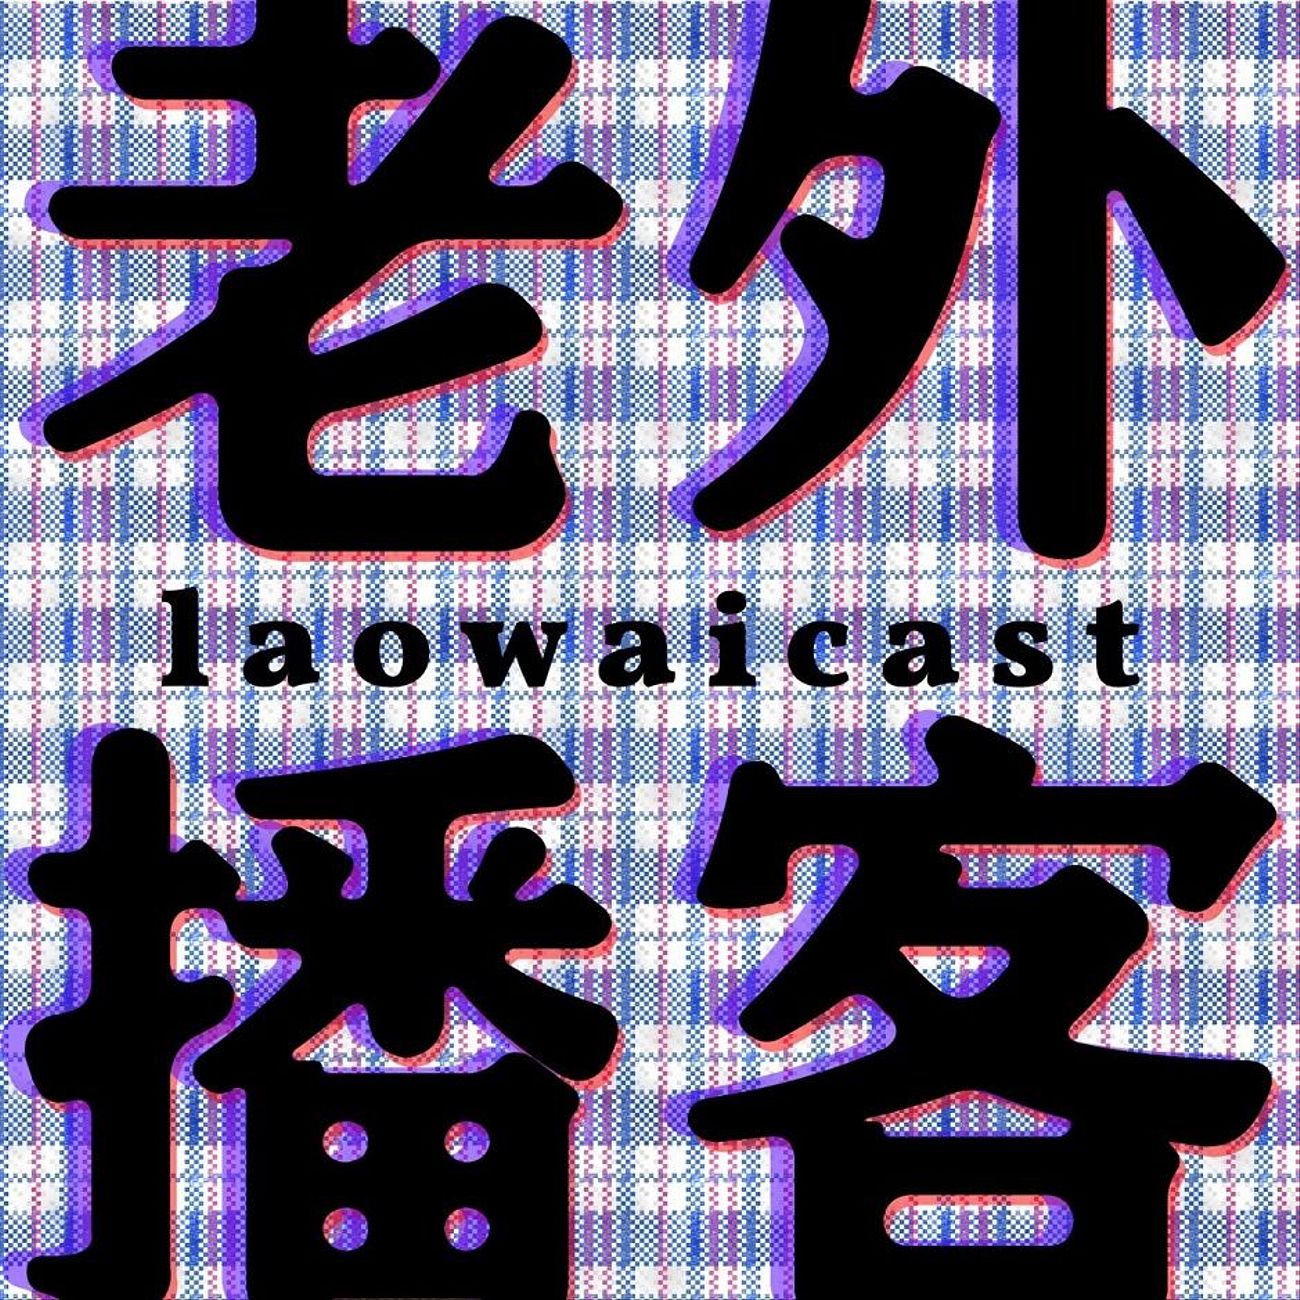 Laowaicast